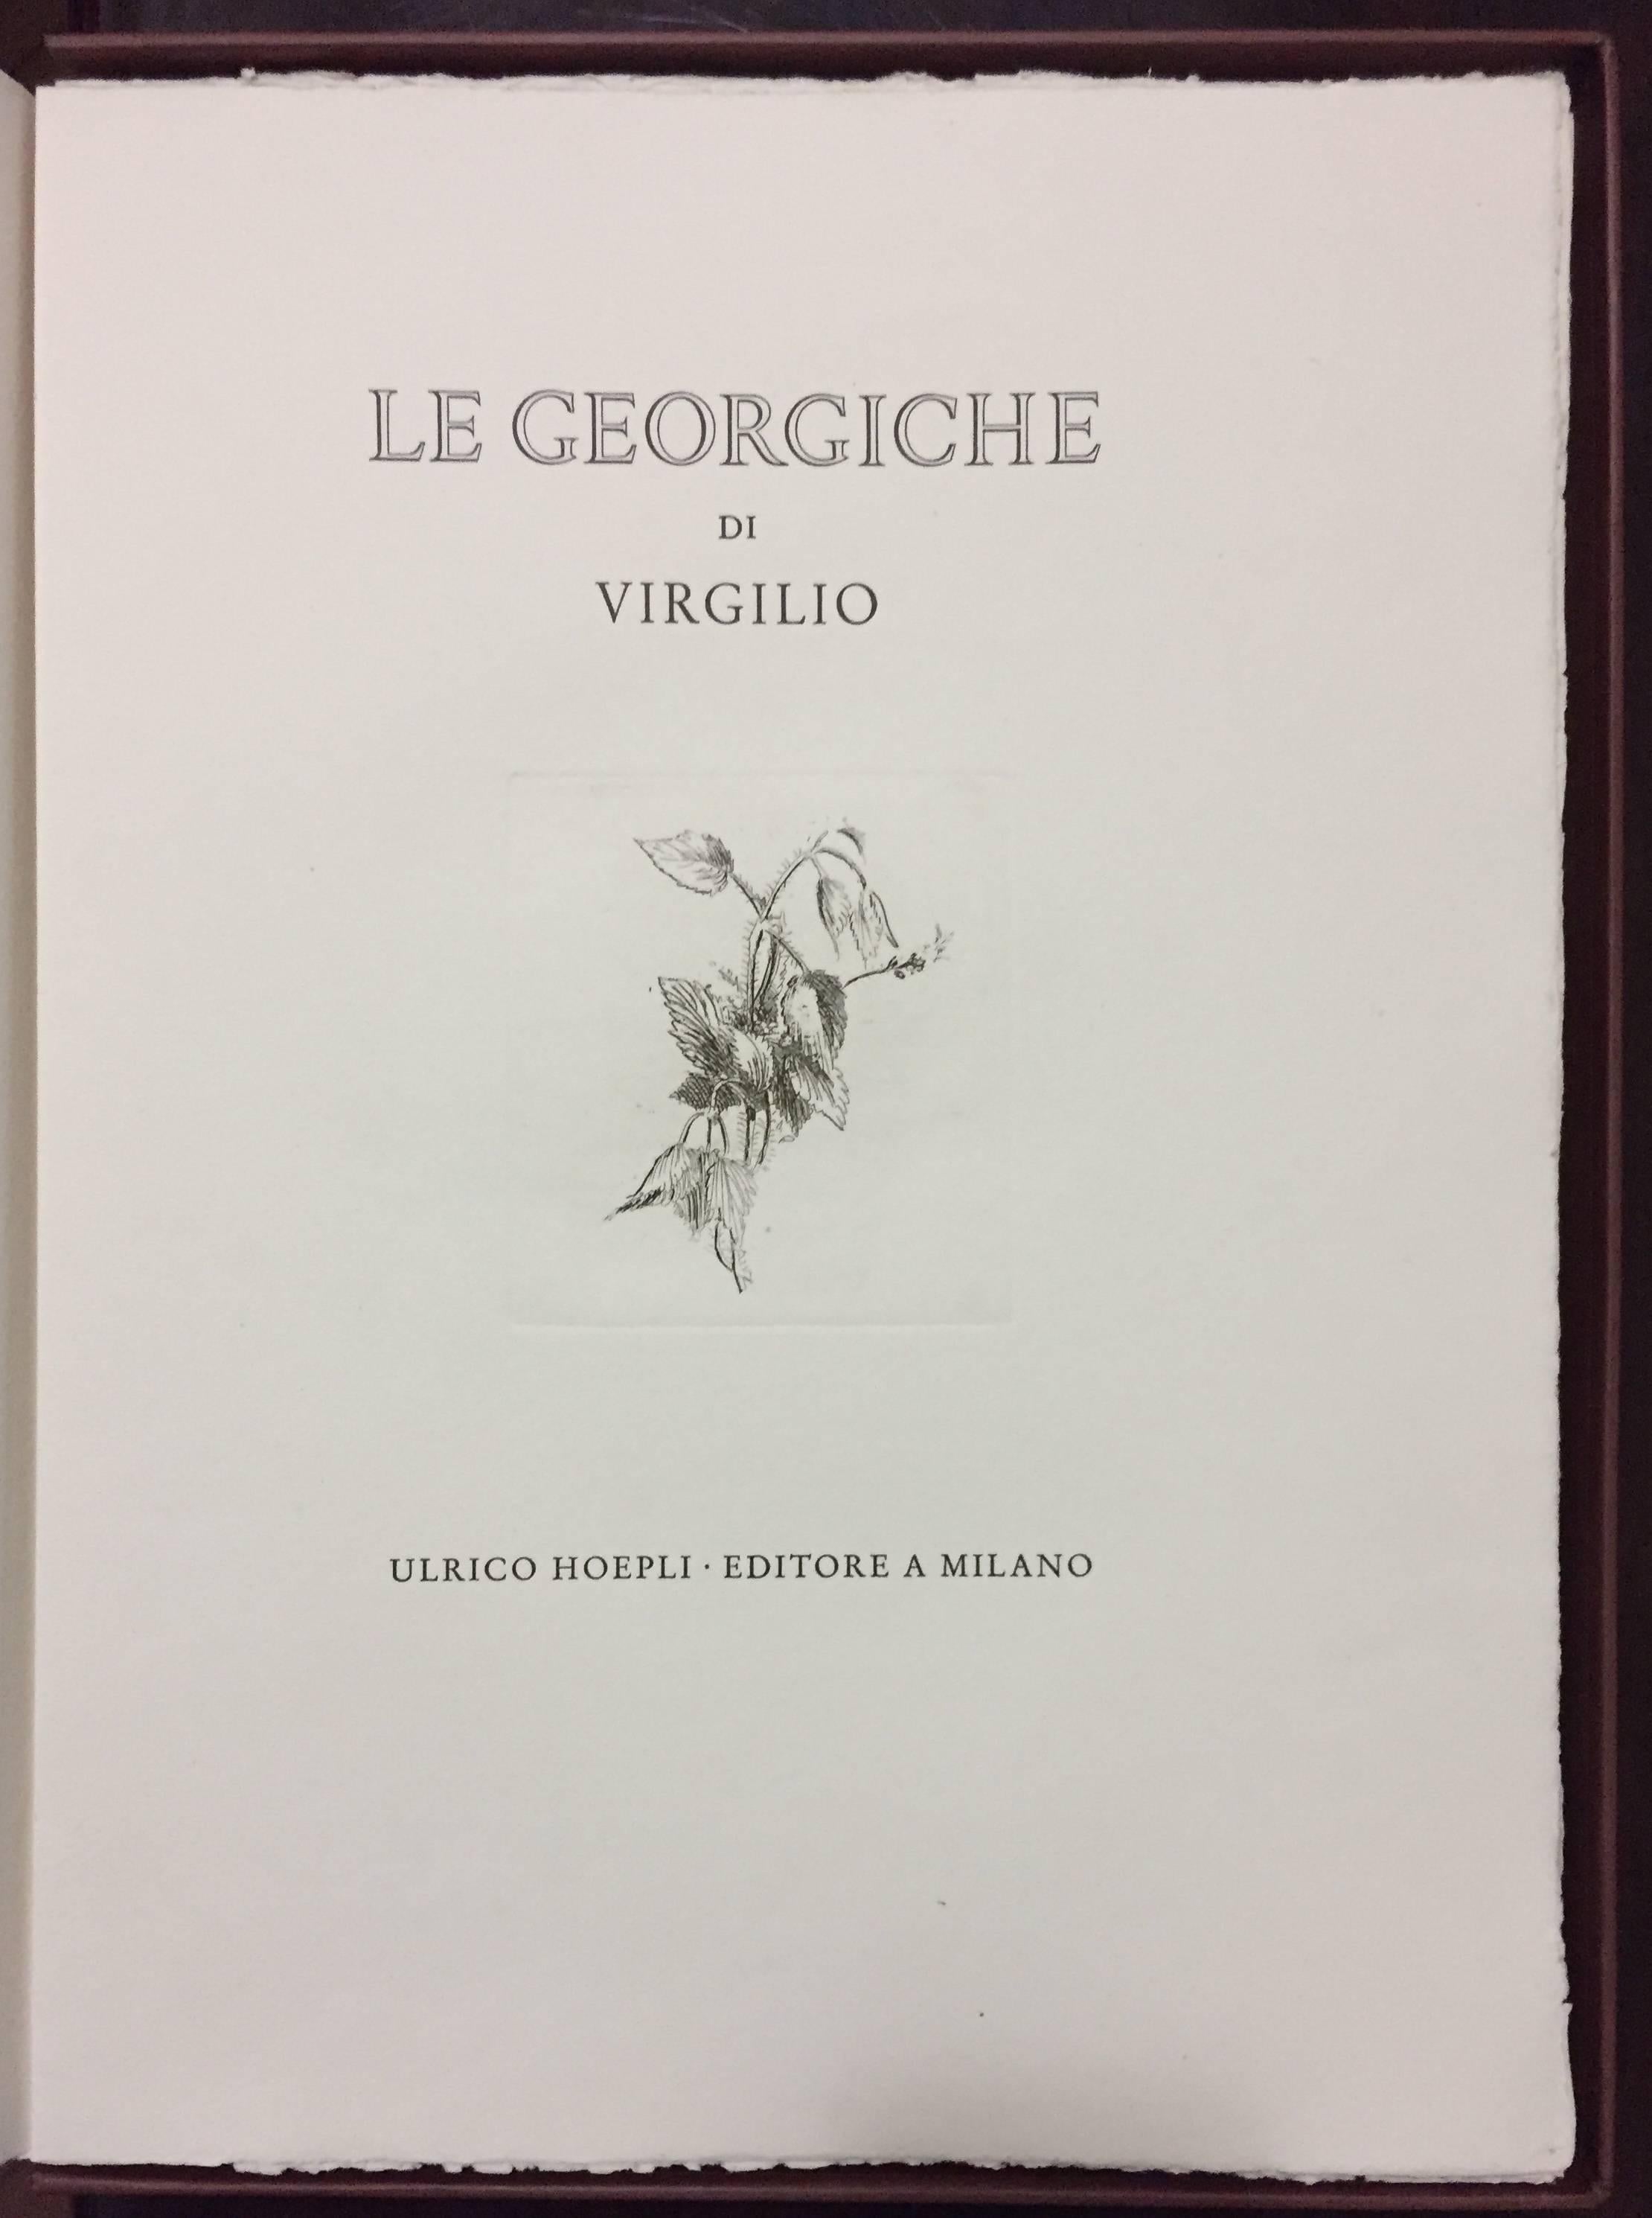 Le Georgiche di Virgilio, including illustrations by G. Manzù - Art by Giacomo Manzú